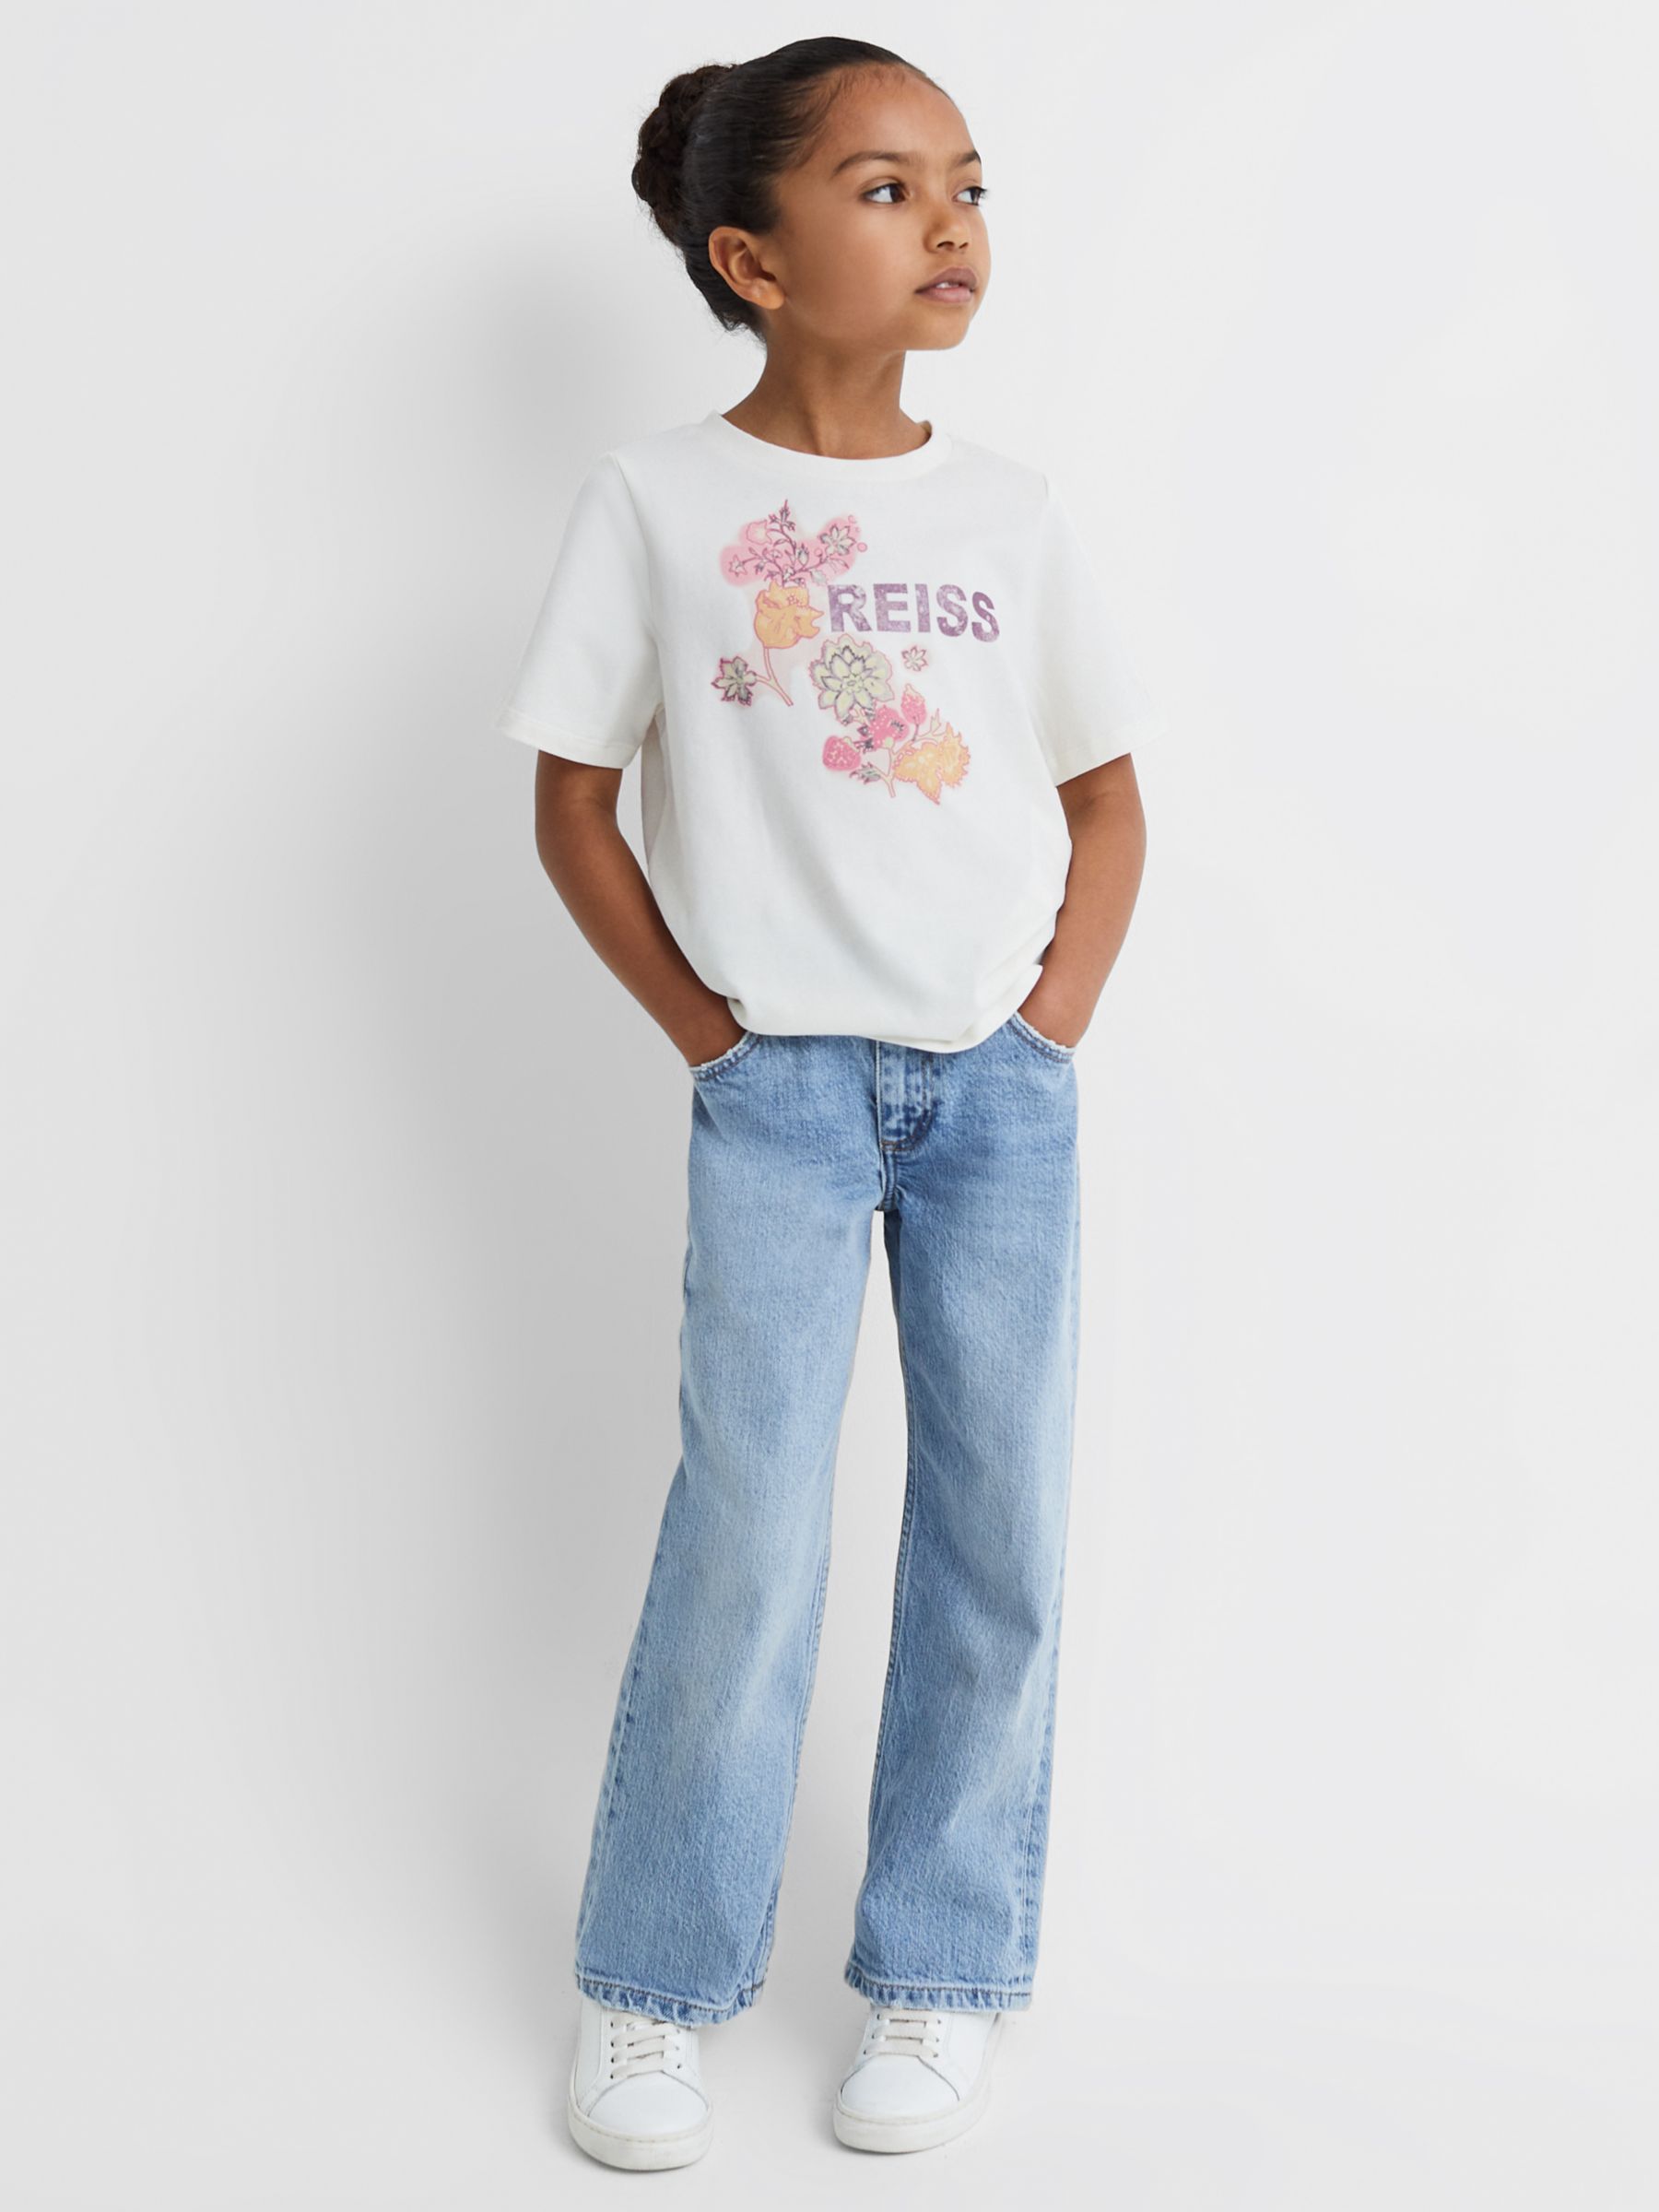 Reiss Kids' Misha Logo Floral Motif Crew Neck T-Shirt, Ivory, 10-11 years